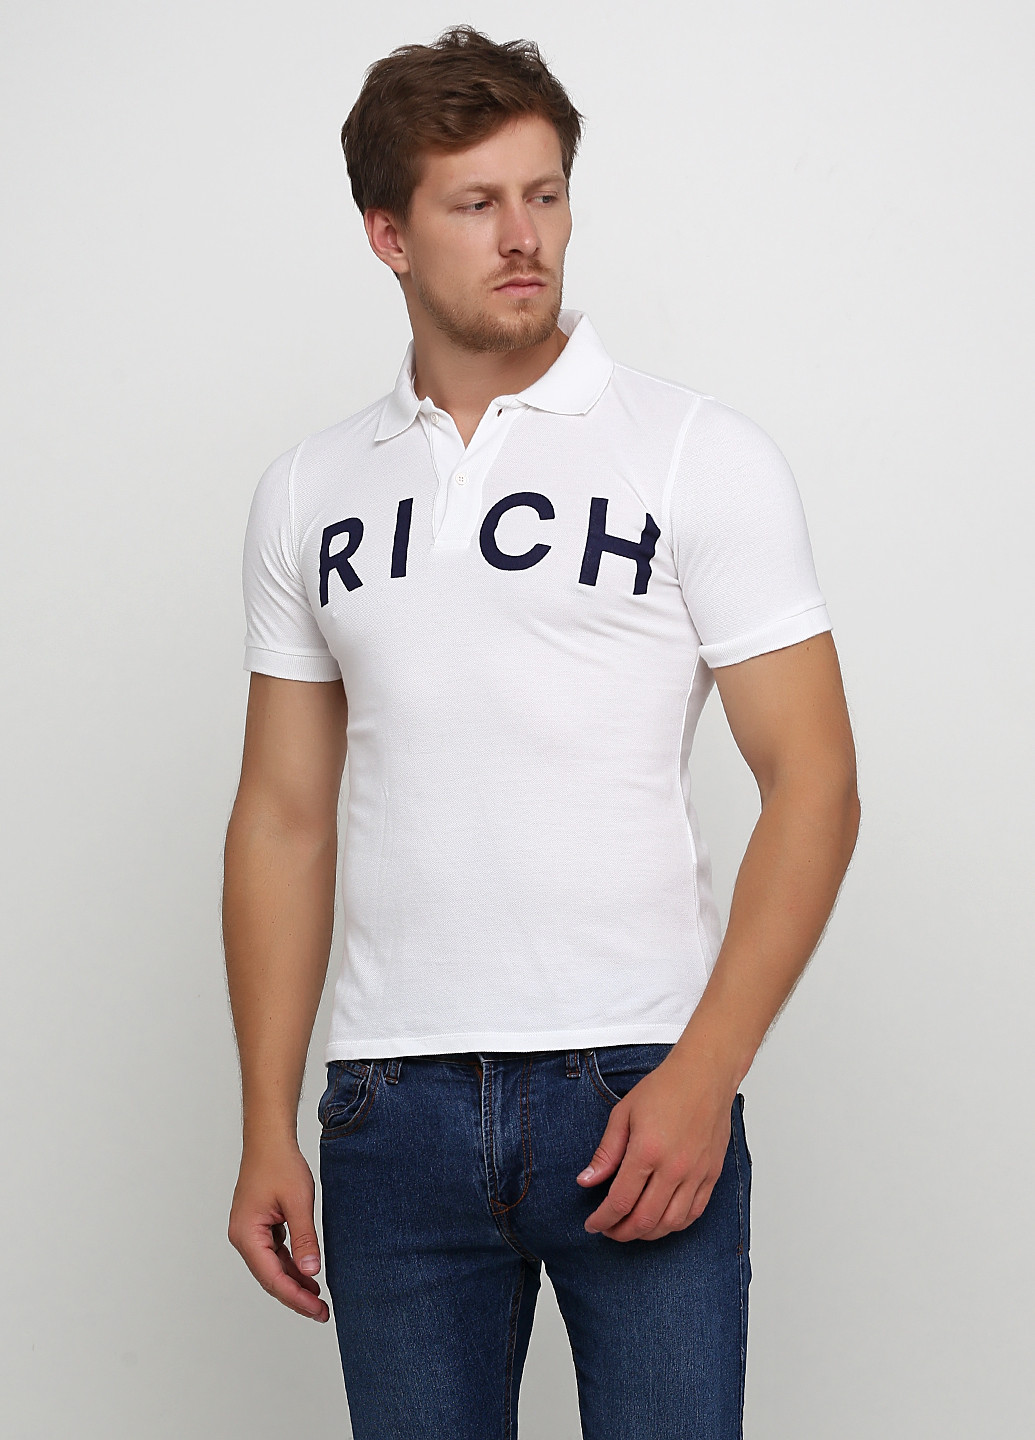 Белая футболка-поло для мужчин Richmond с надписью